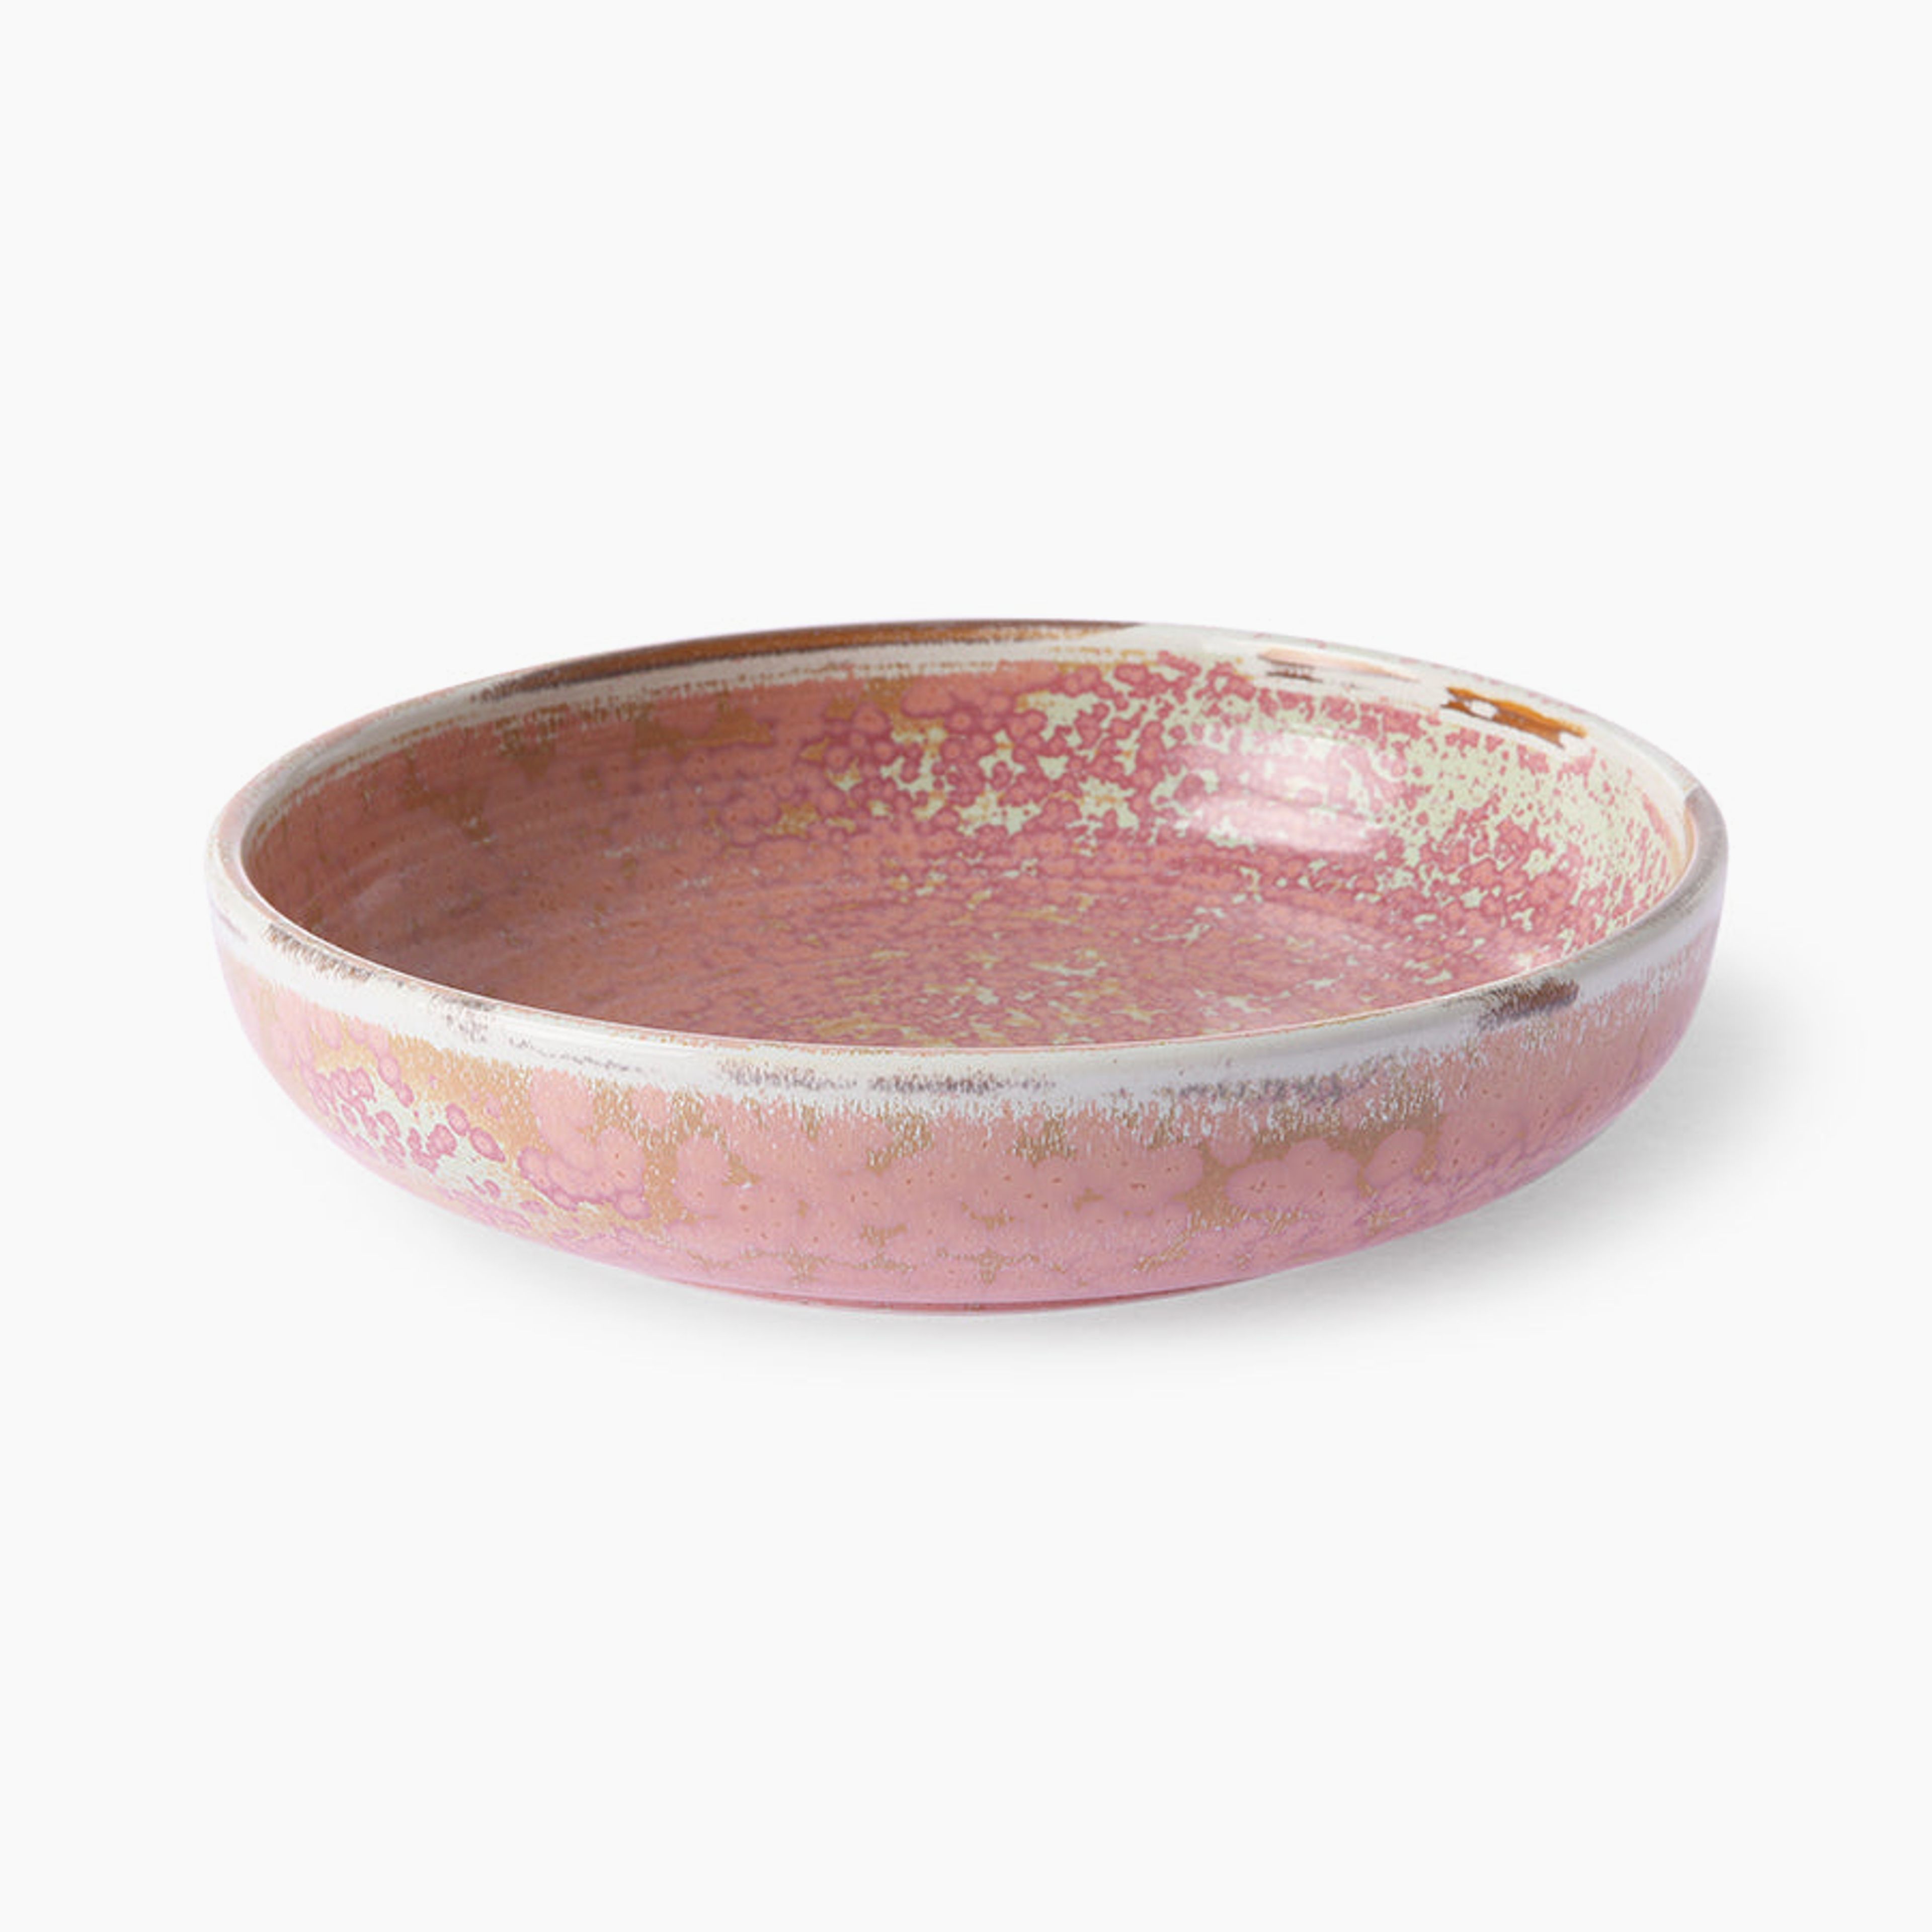 Chef ceramics - deep plate rustic pink - medium